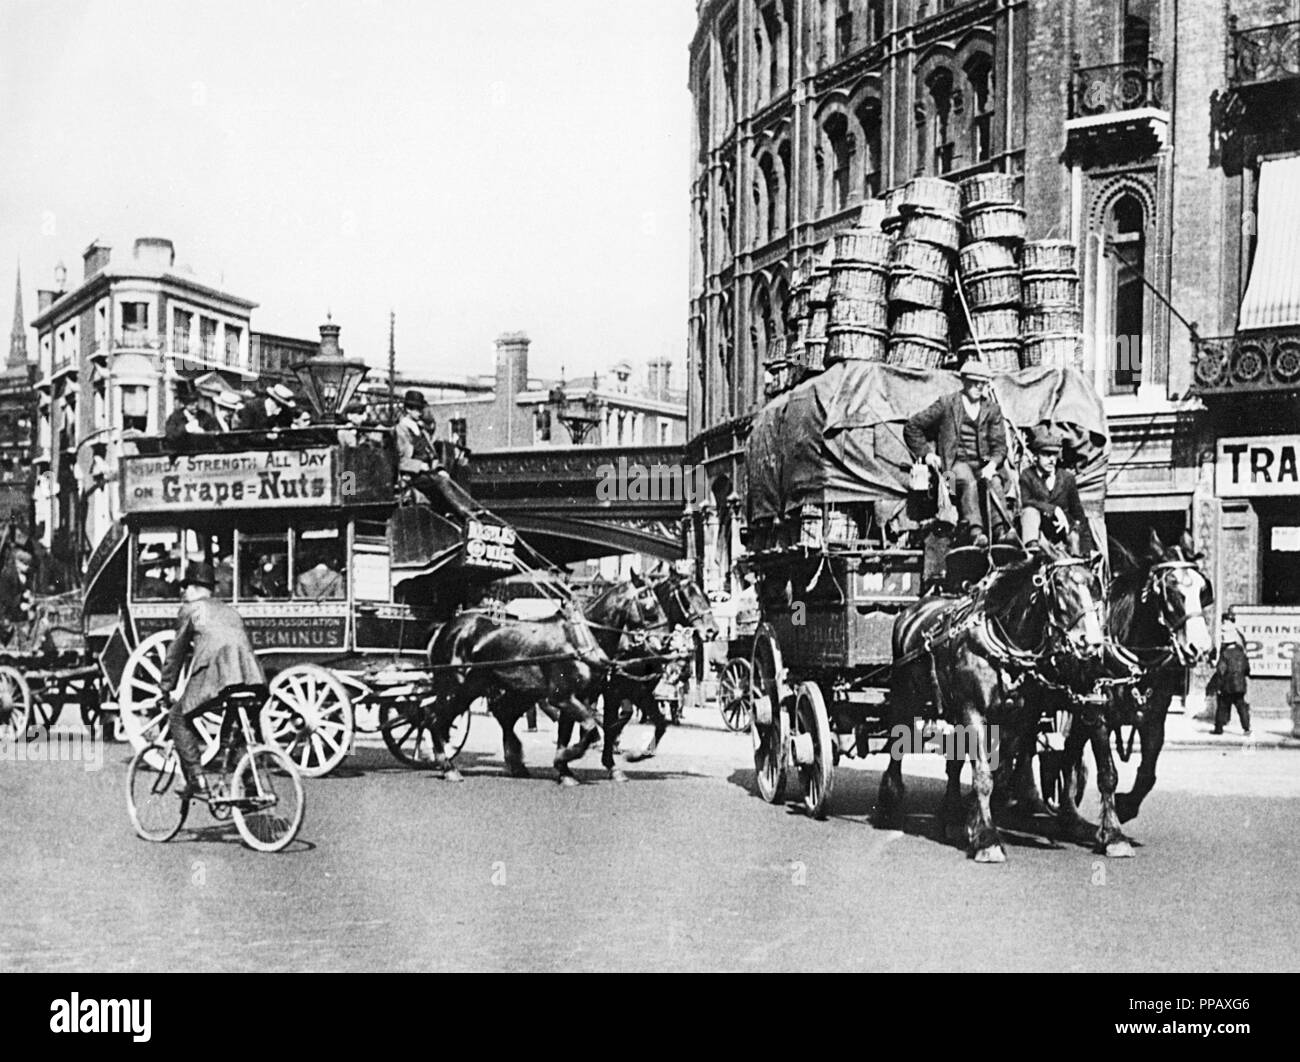 Early 1900s street scene, London. Stock Photo